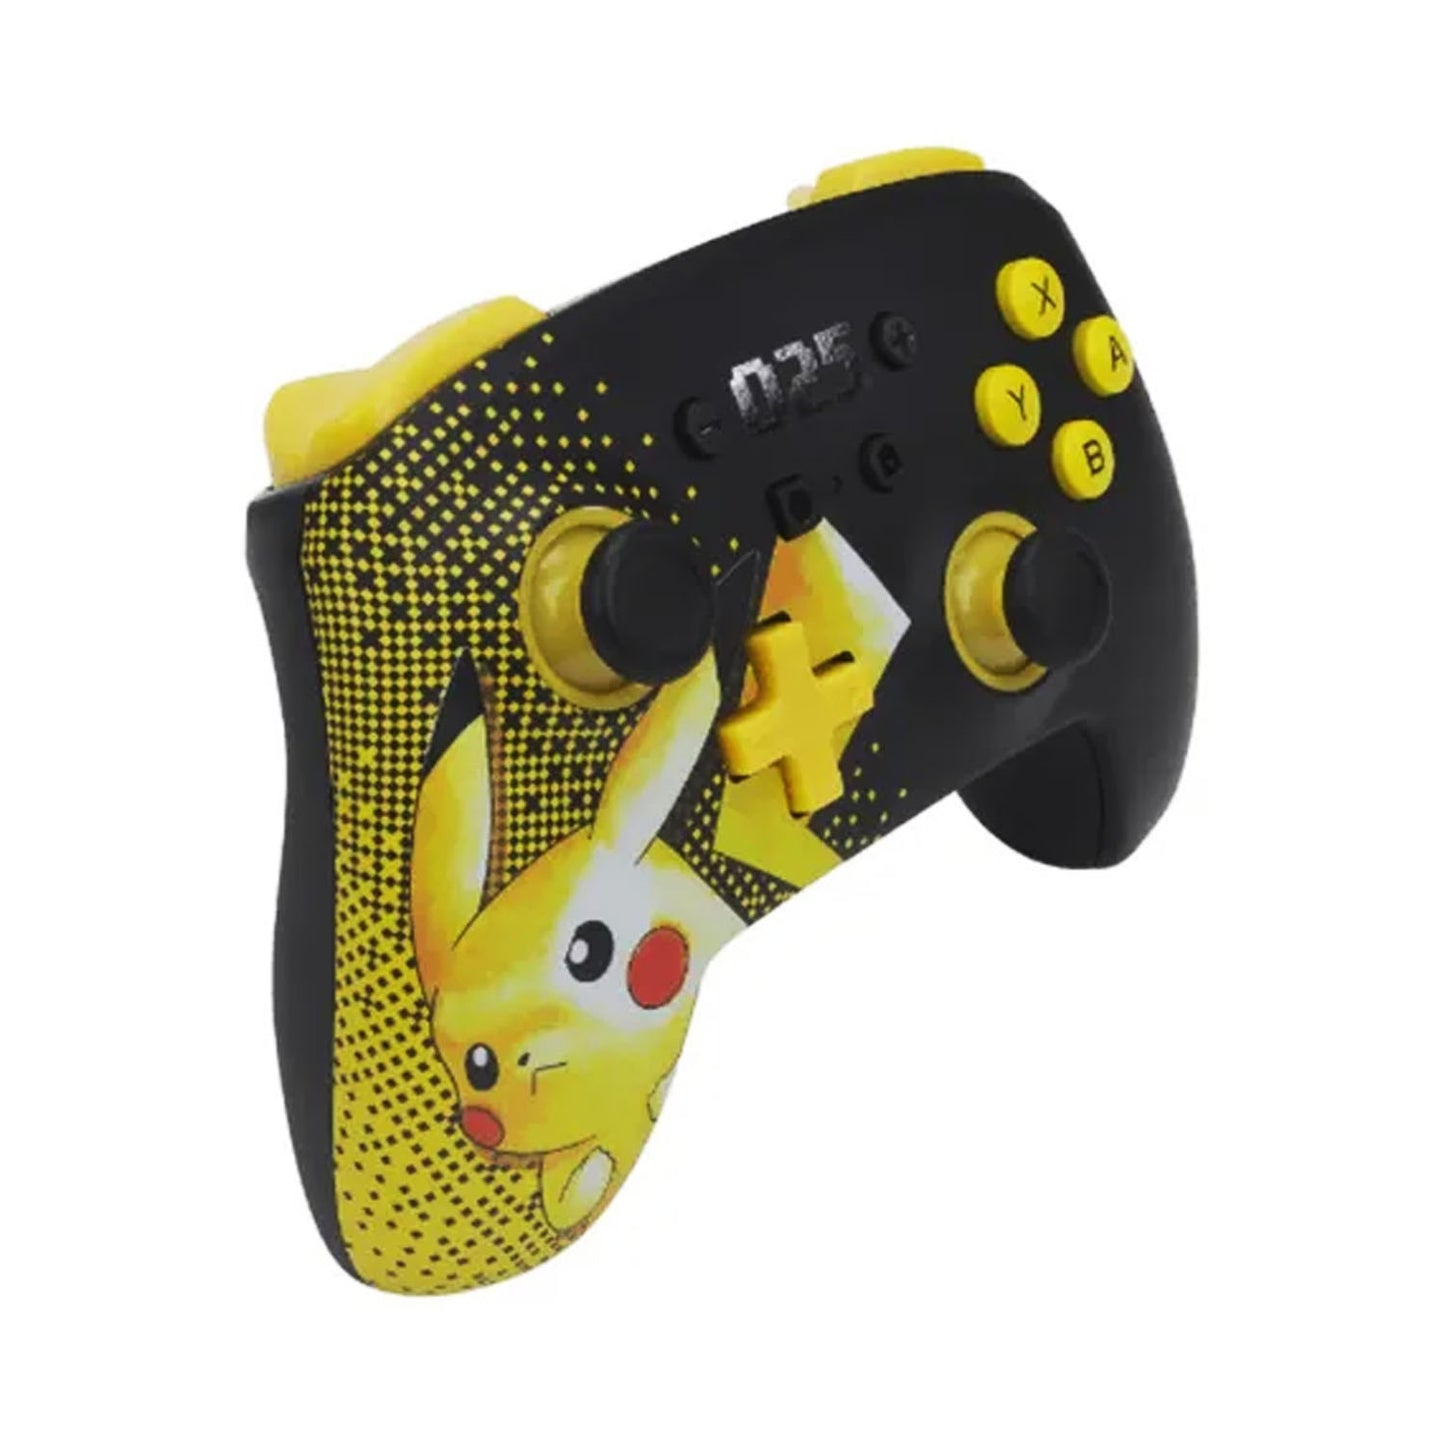 Control Pro Inalámbrico Switch Pikachu Negro y Amarillo